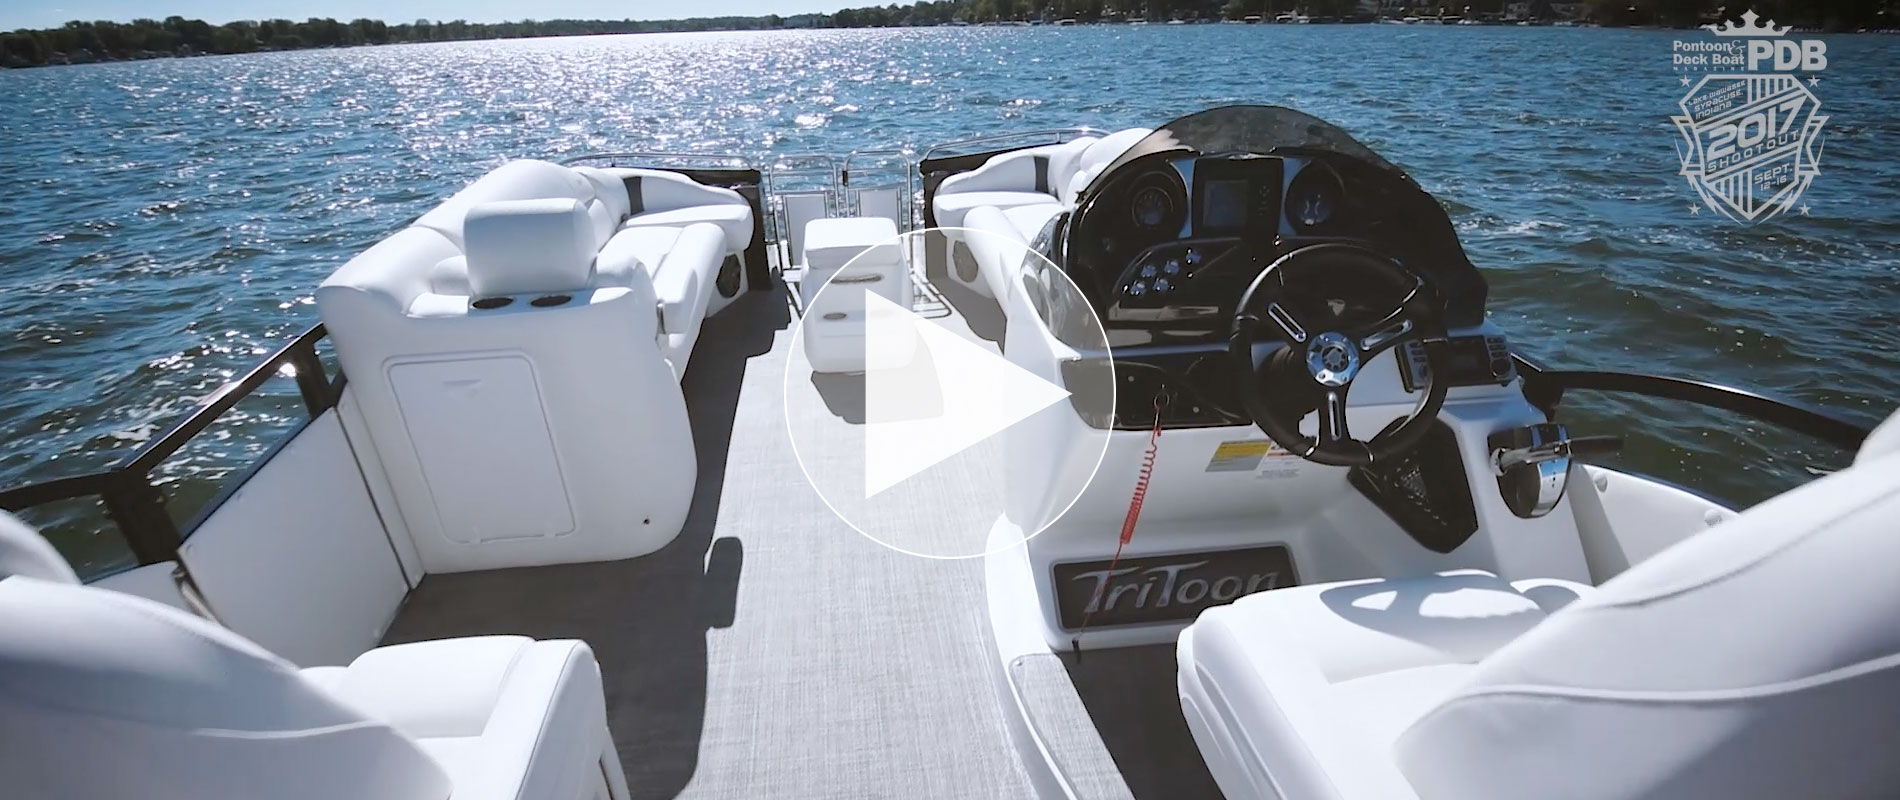 Pontoon & Deck Boat Magazine 2017 Shootout Video featuring the SportToon 26TT